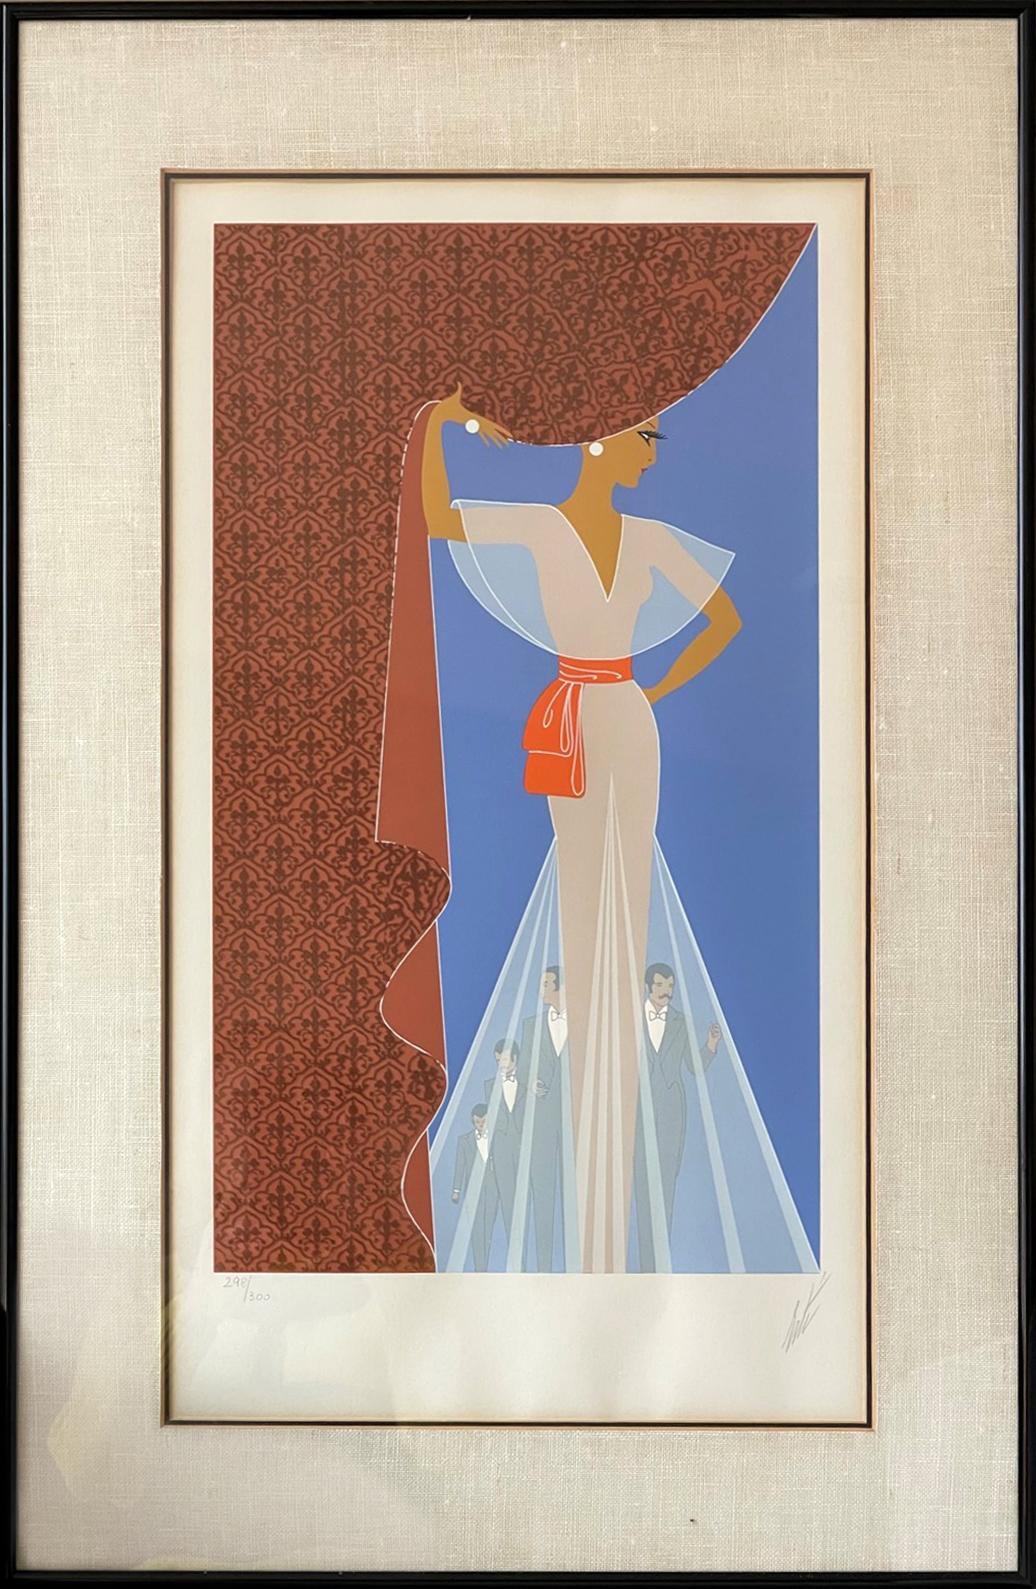 The Curtain, Art Deco Print by Erte 1977